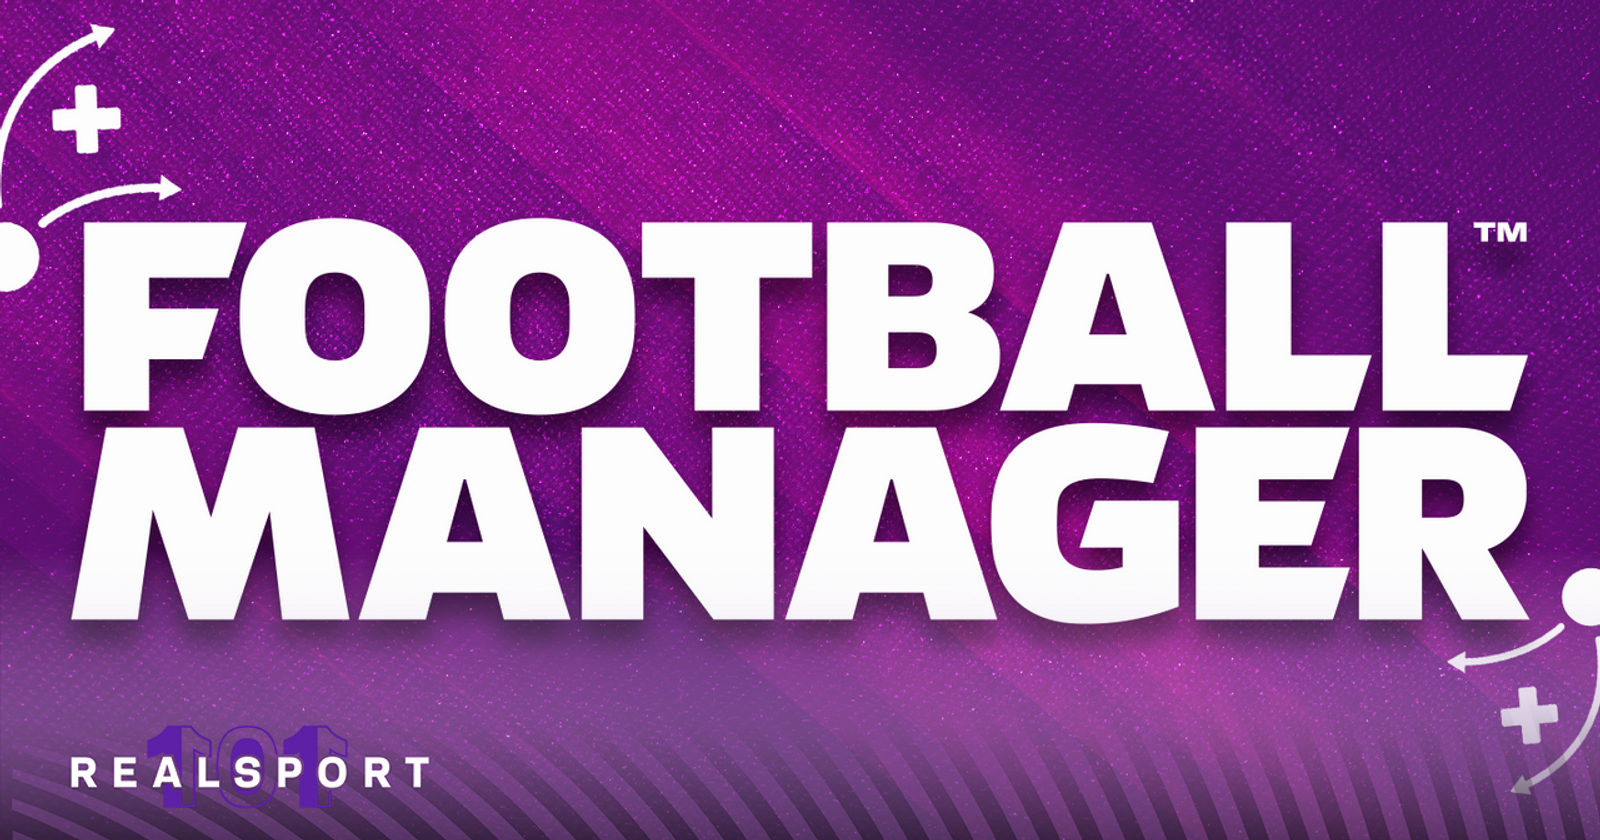 Original] Football Manager 2024 Football Manager 2023 2022 Steam